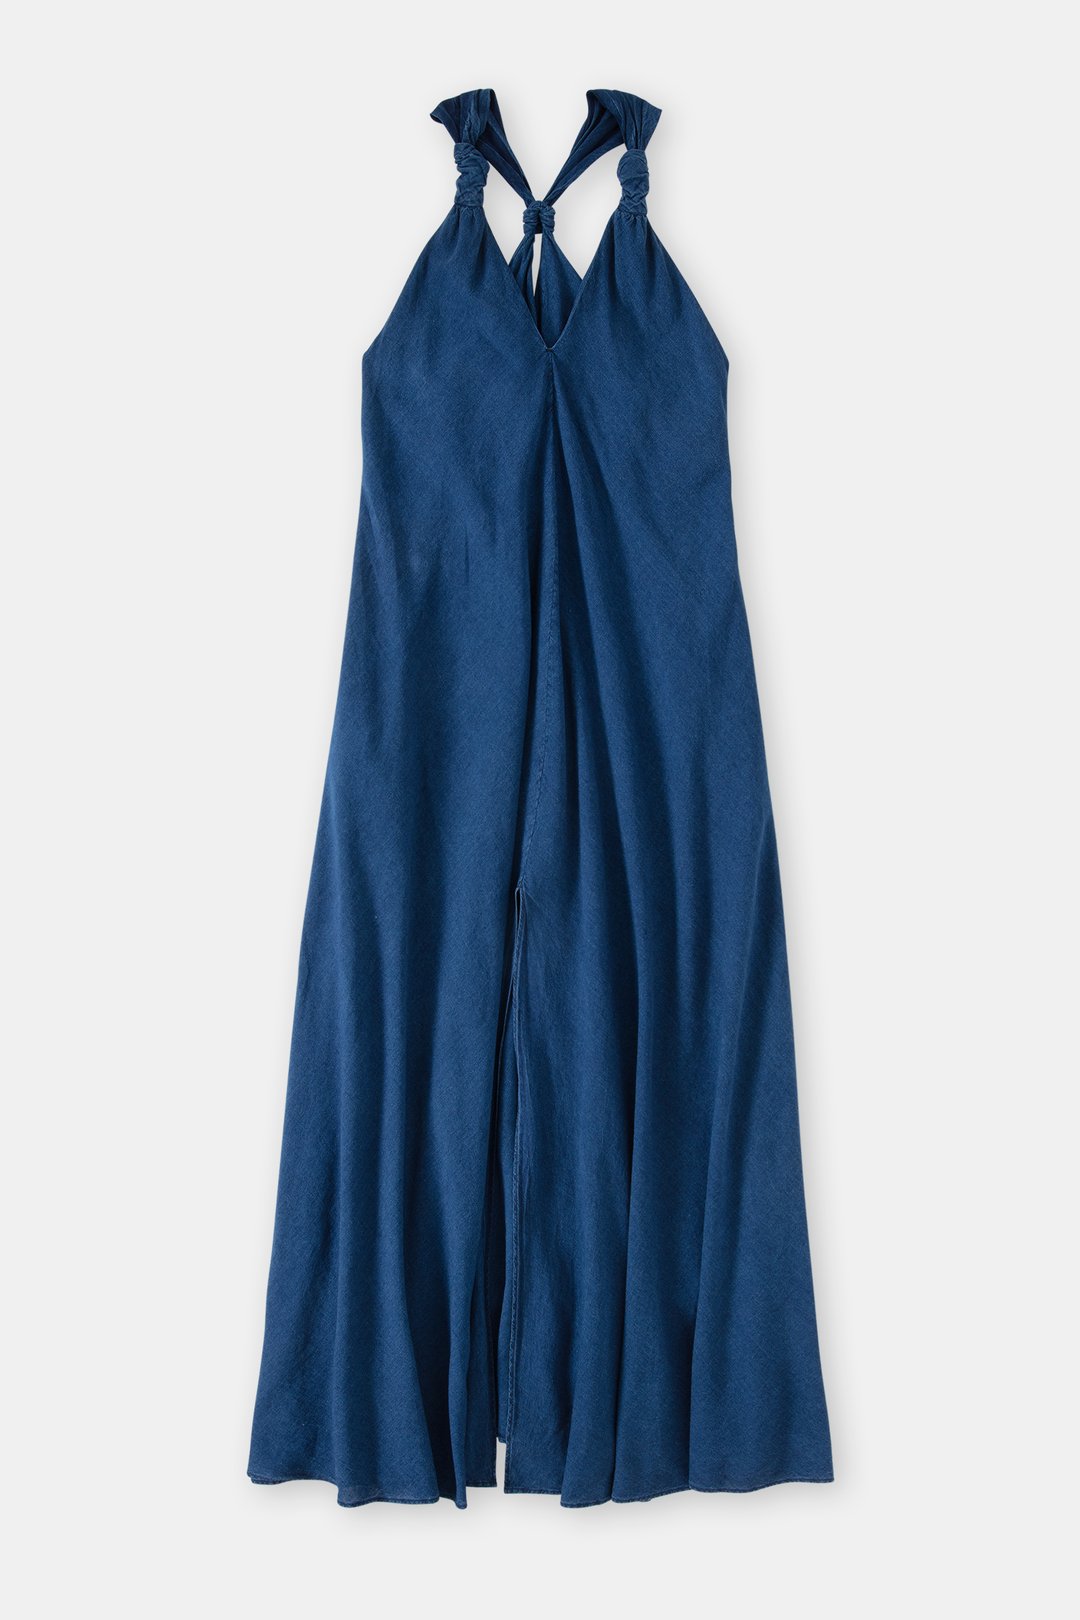 Long dark blue dress